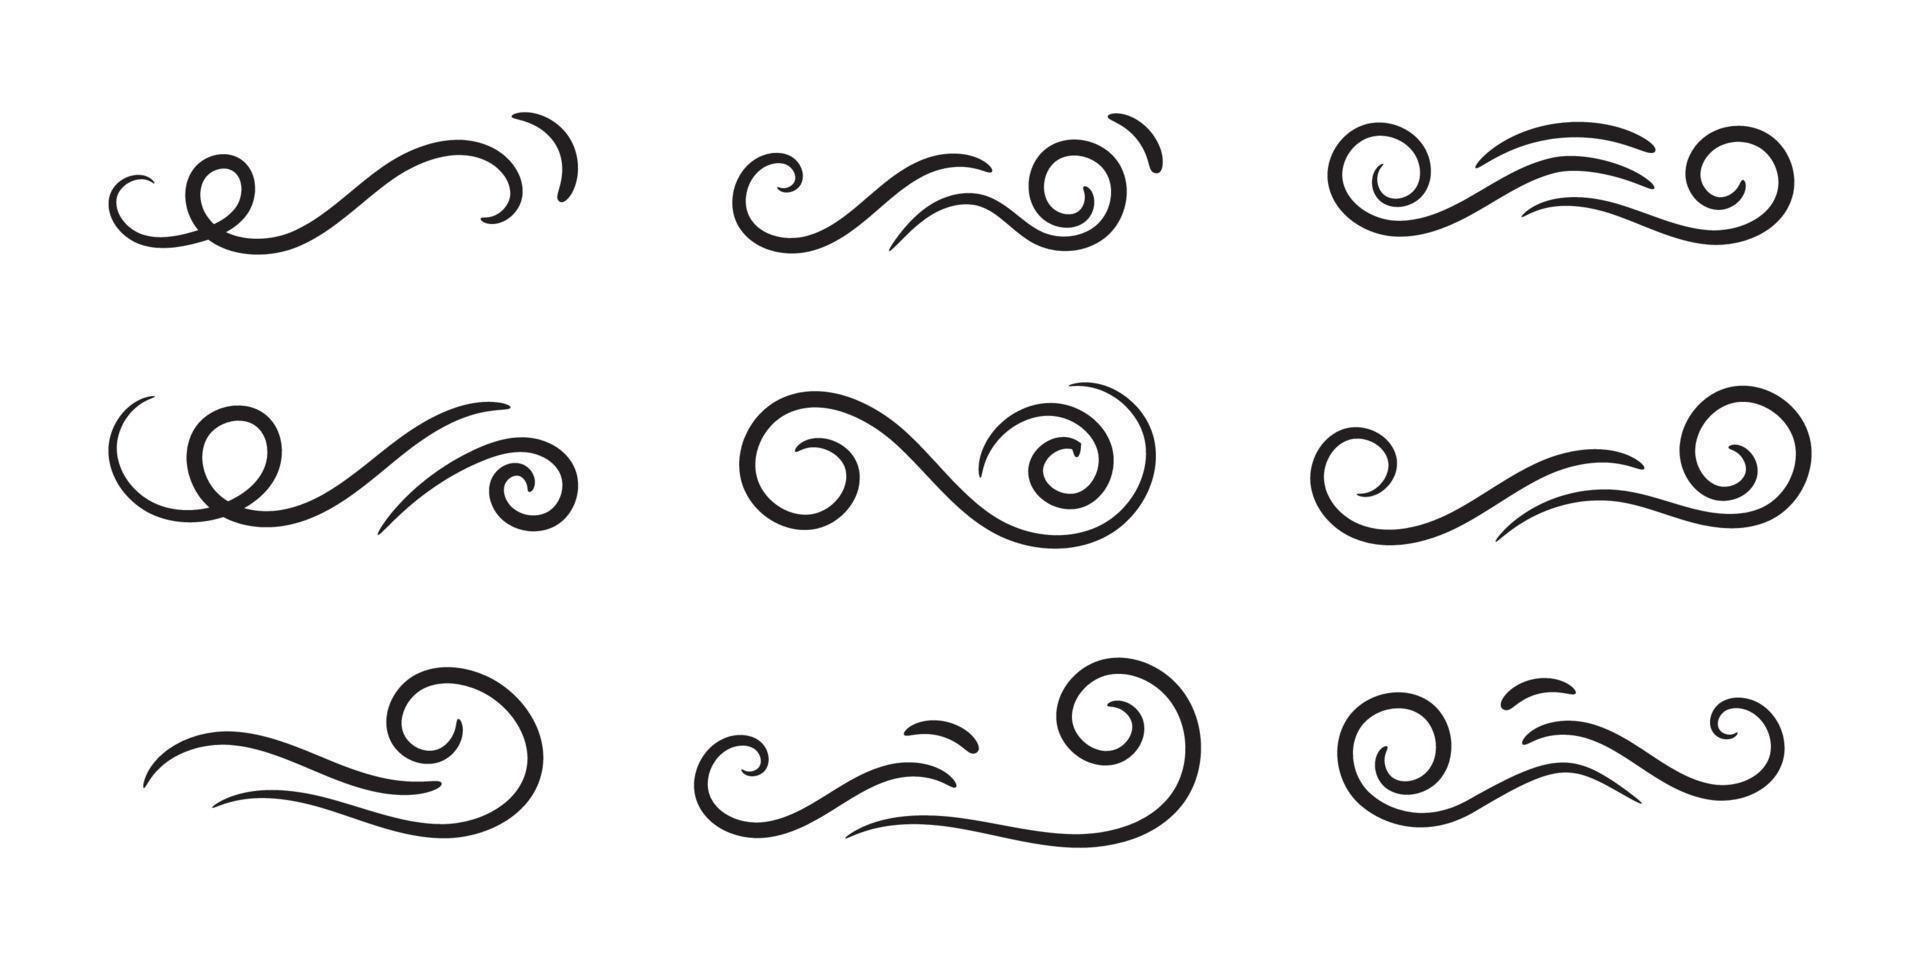 Swirl ornament stroke. Ornamental curls, swirls divider and filigree ornaments vector illustration.